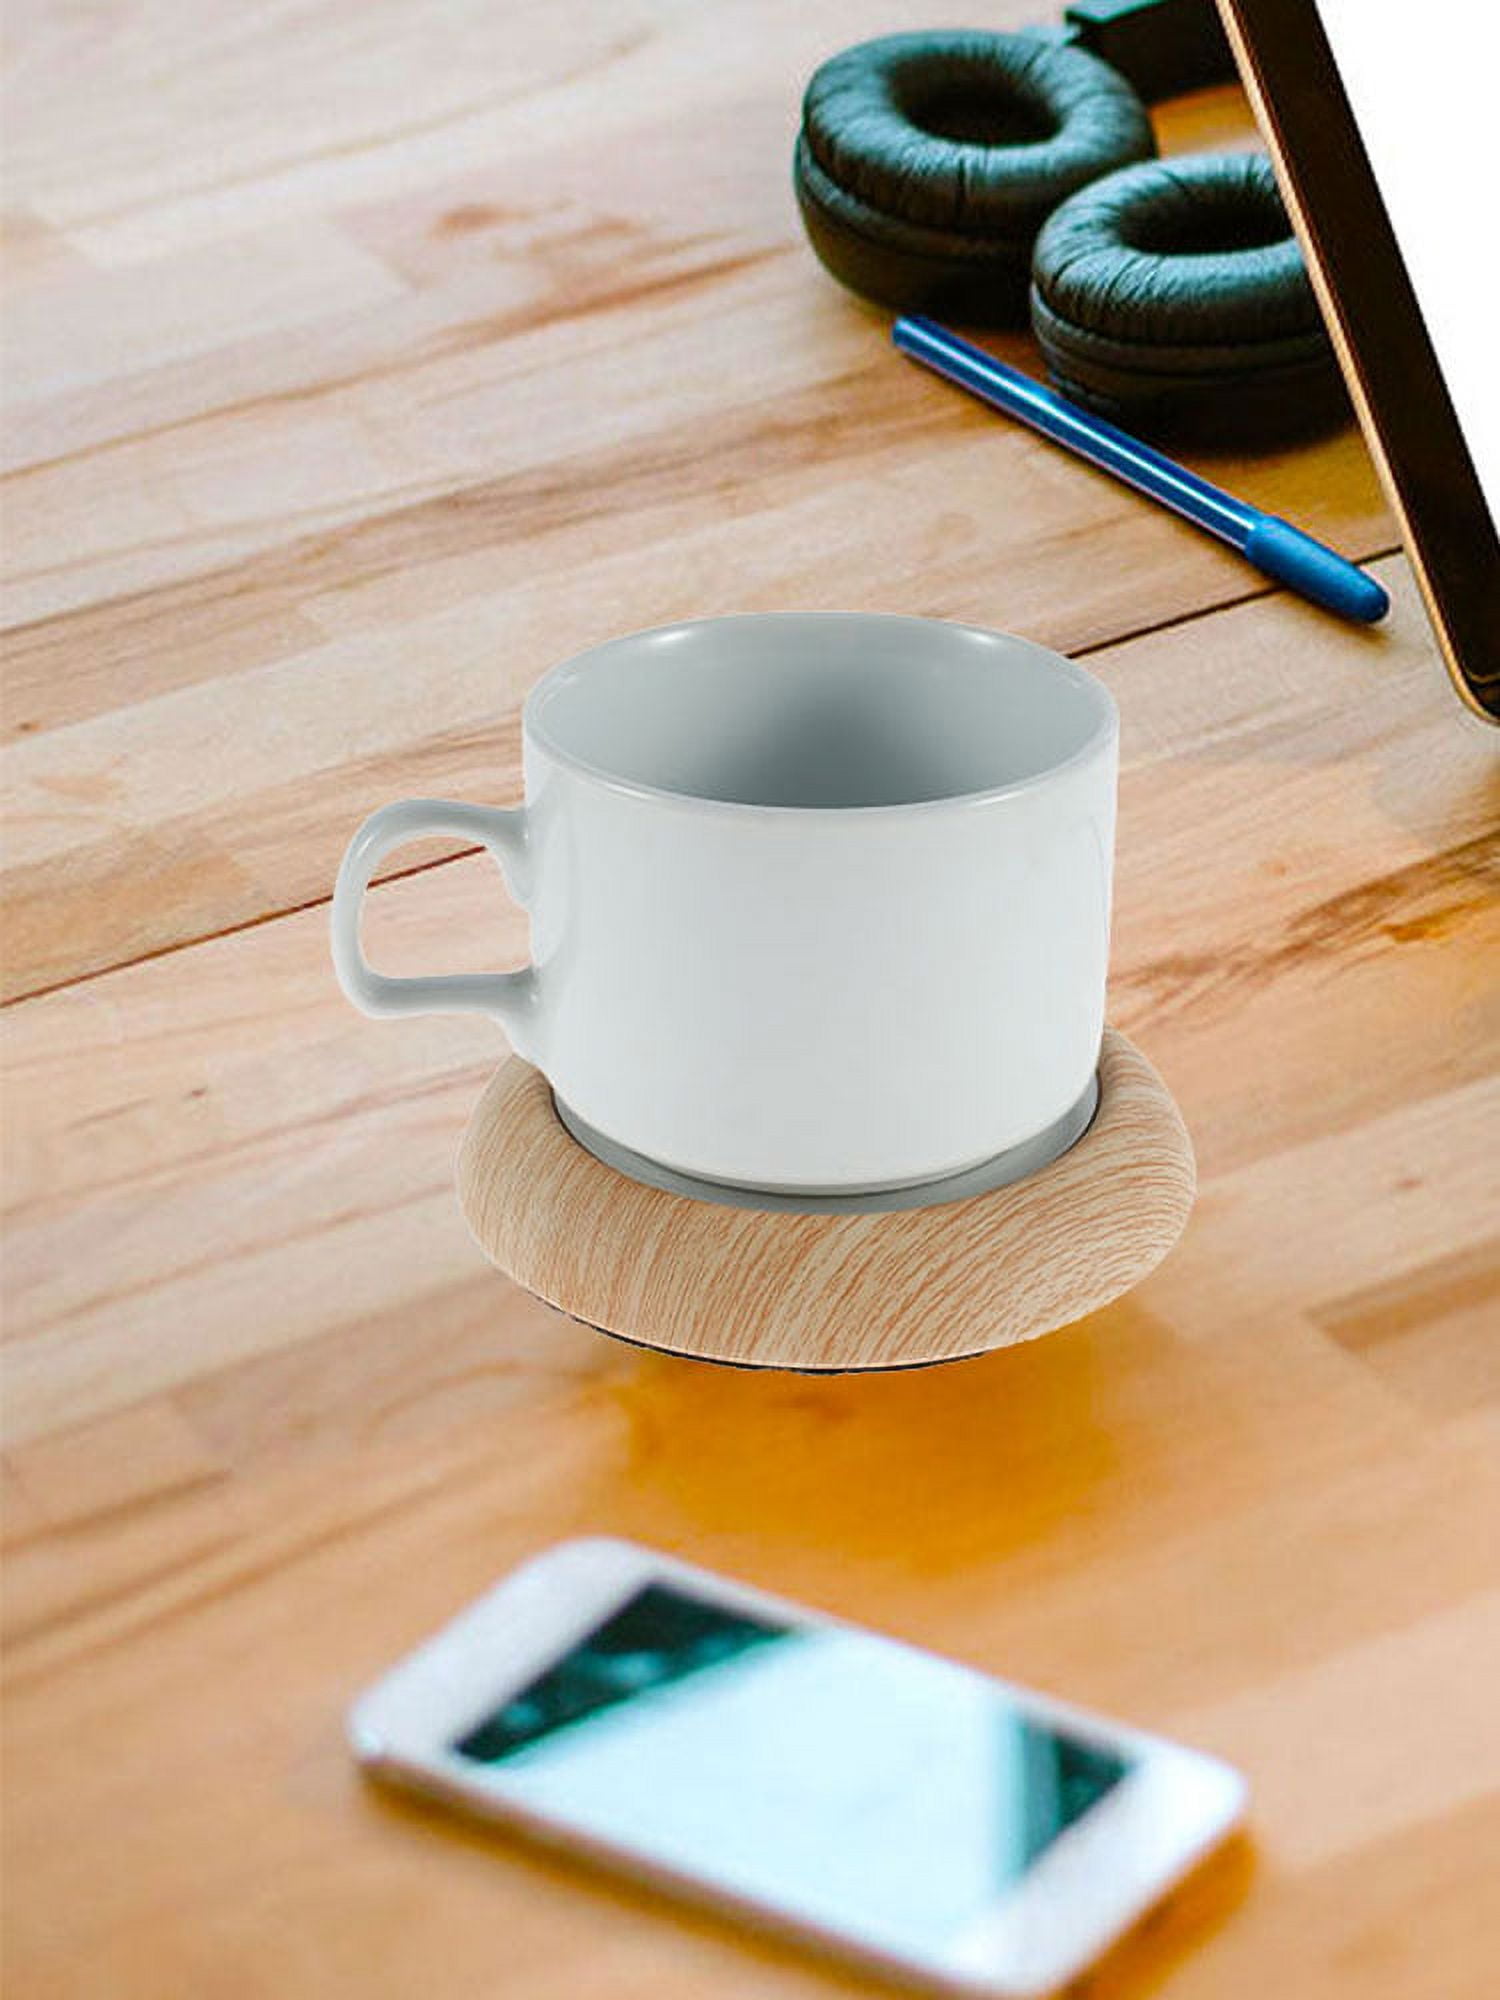 Jytue Portable Heating Coaster USB Electric Coffee Mug Warmer 5V 10W  Rechargeable Coffee Cup Heater Waterproof Tea Coffee Milk Warmer Pad for  Office